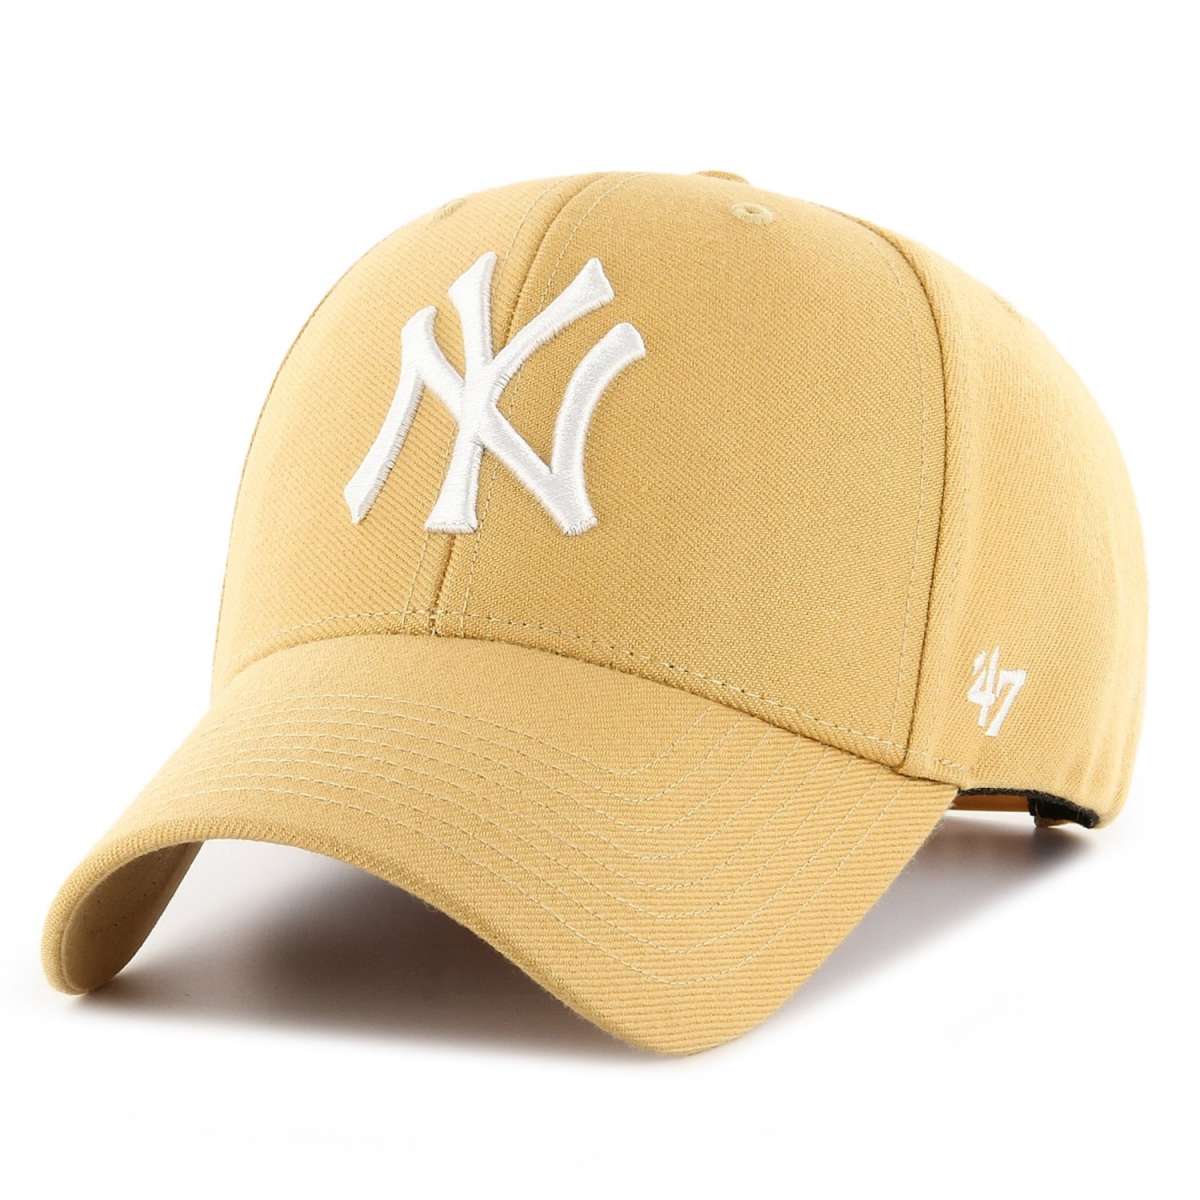 NY Yankees marrón claro tan brown logo blanco 47' MVP snapback visera curva